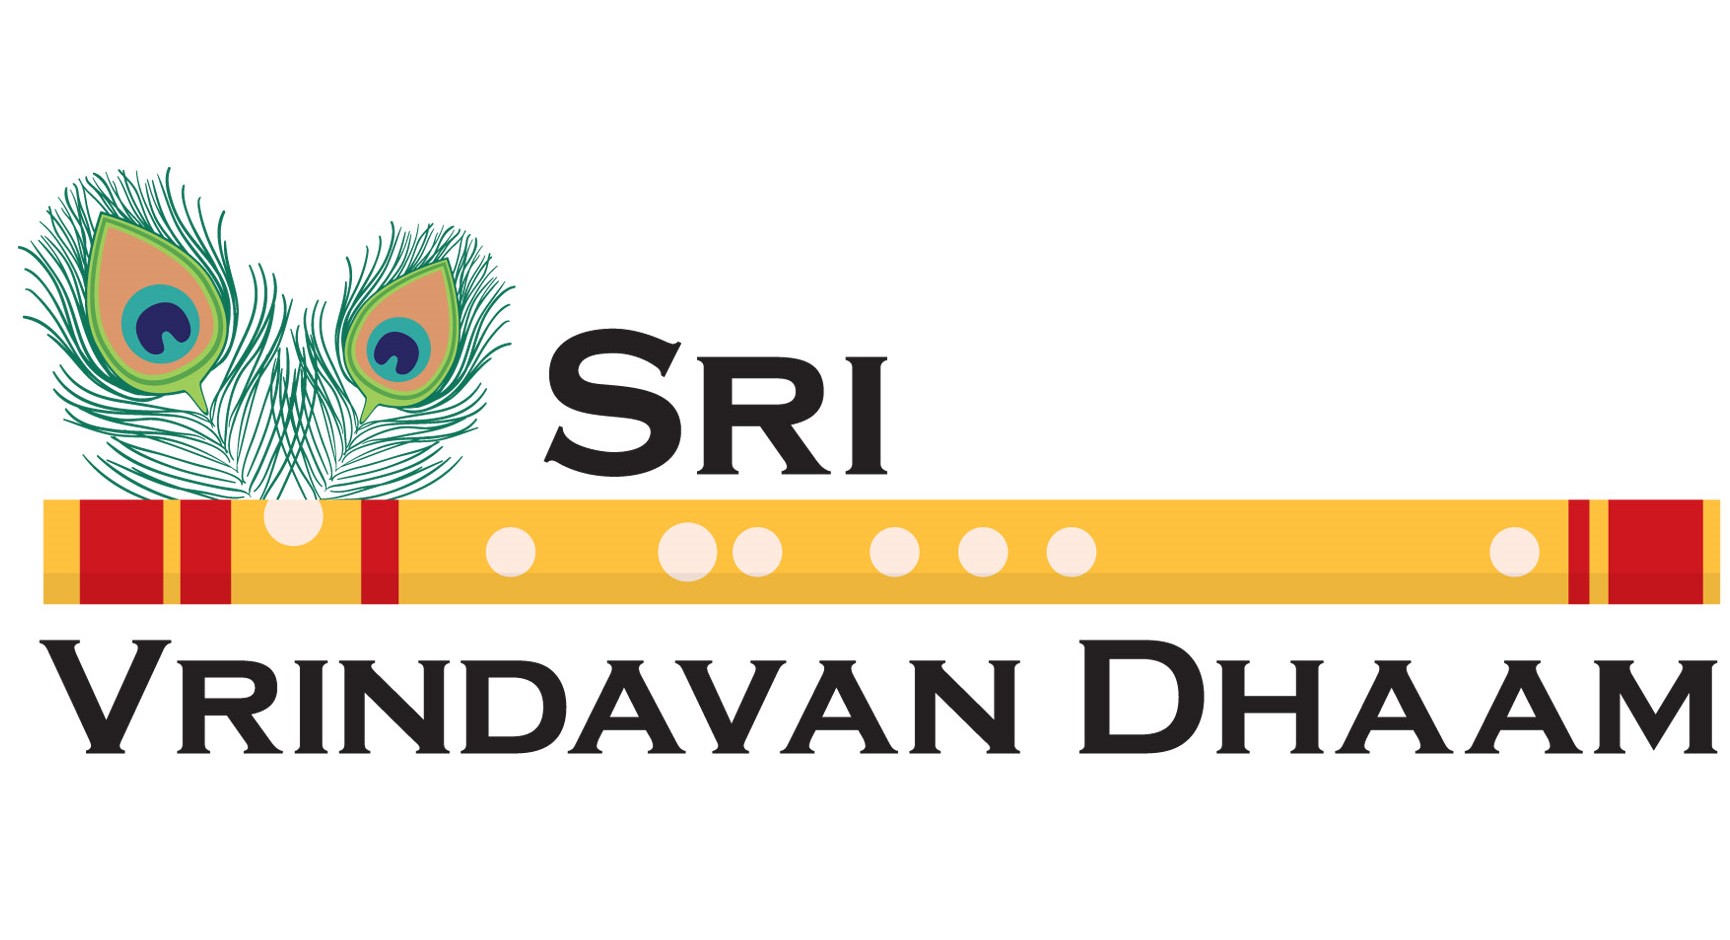 Sri Vrindavan Dhaam logo